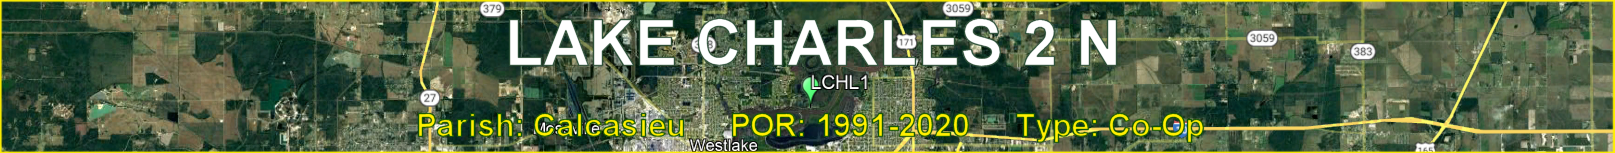 Title image for Lake Charles 2 N